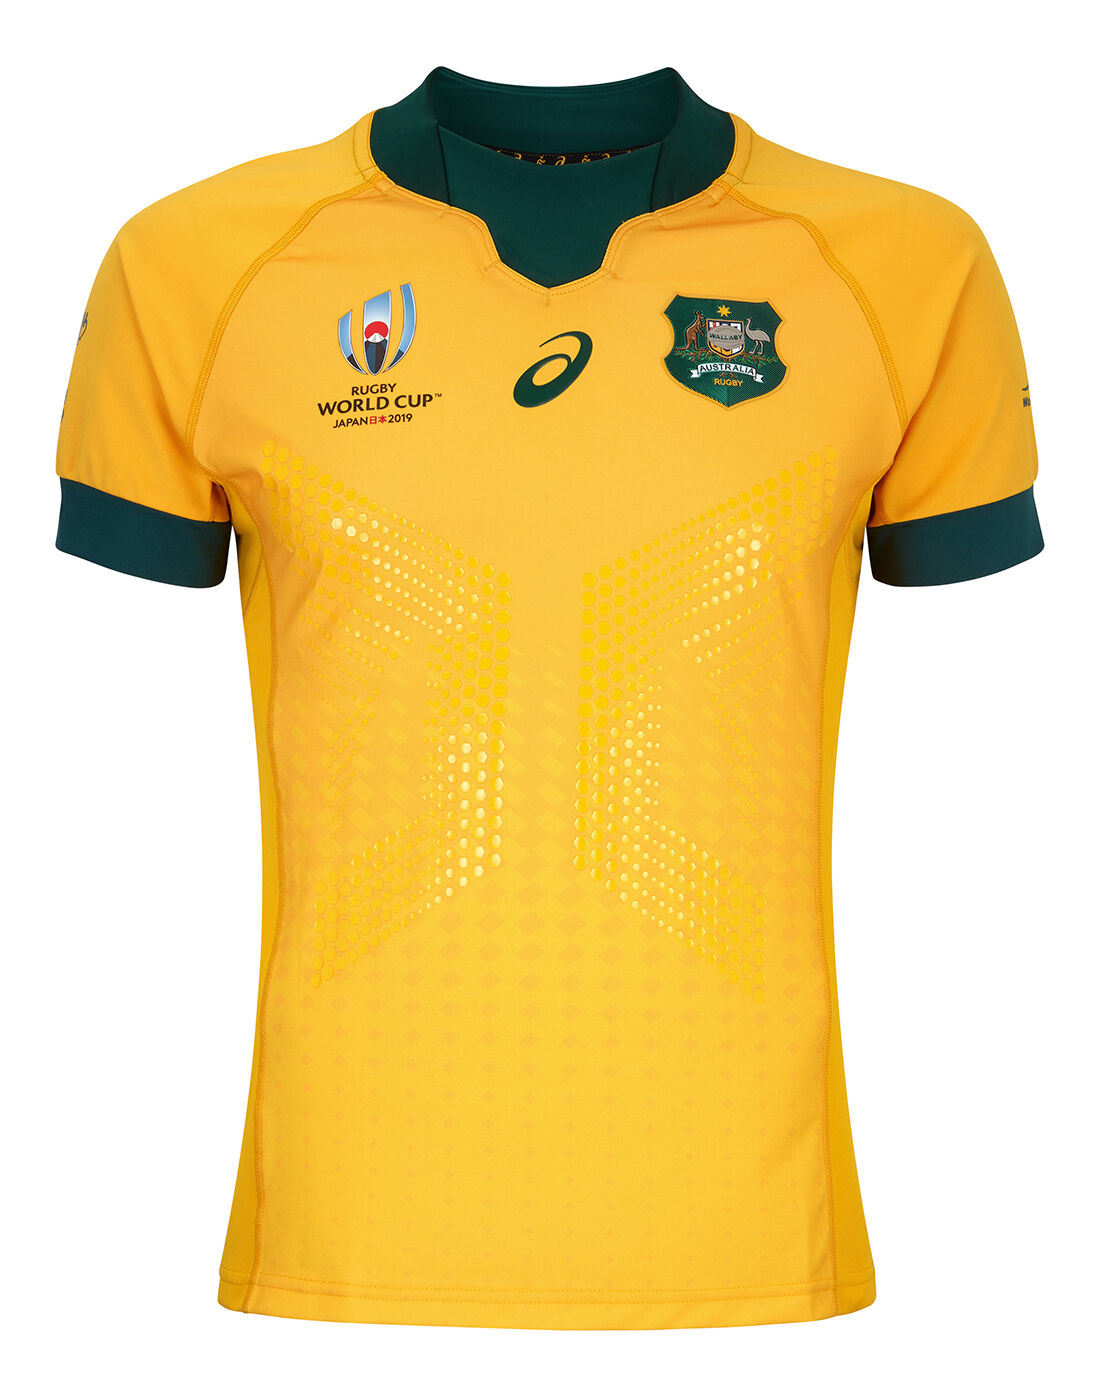 australia jersey 2019